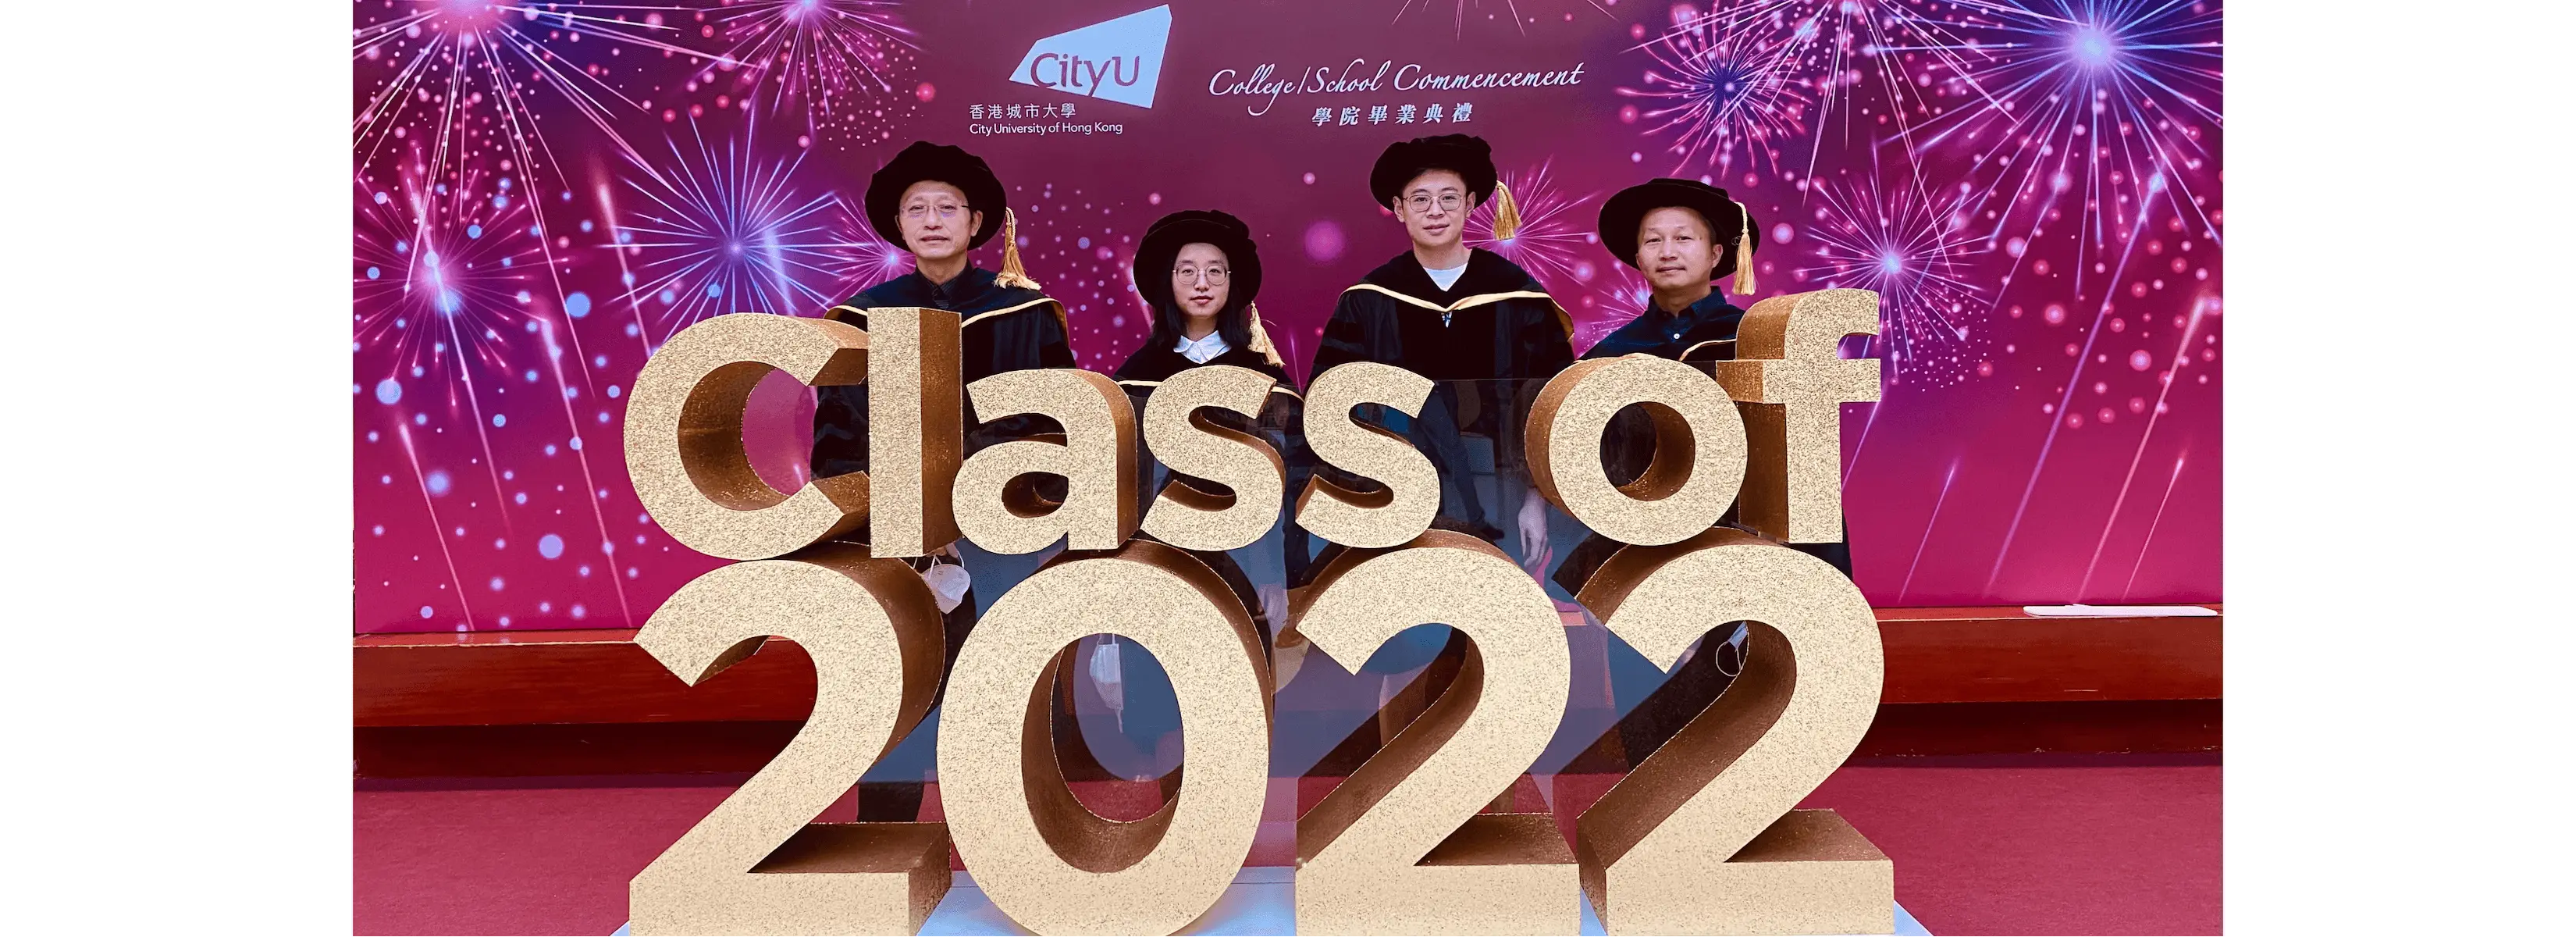 2022 College/School Commencement